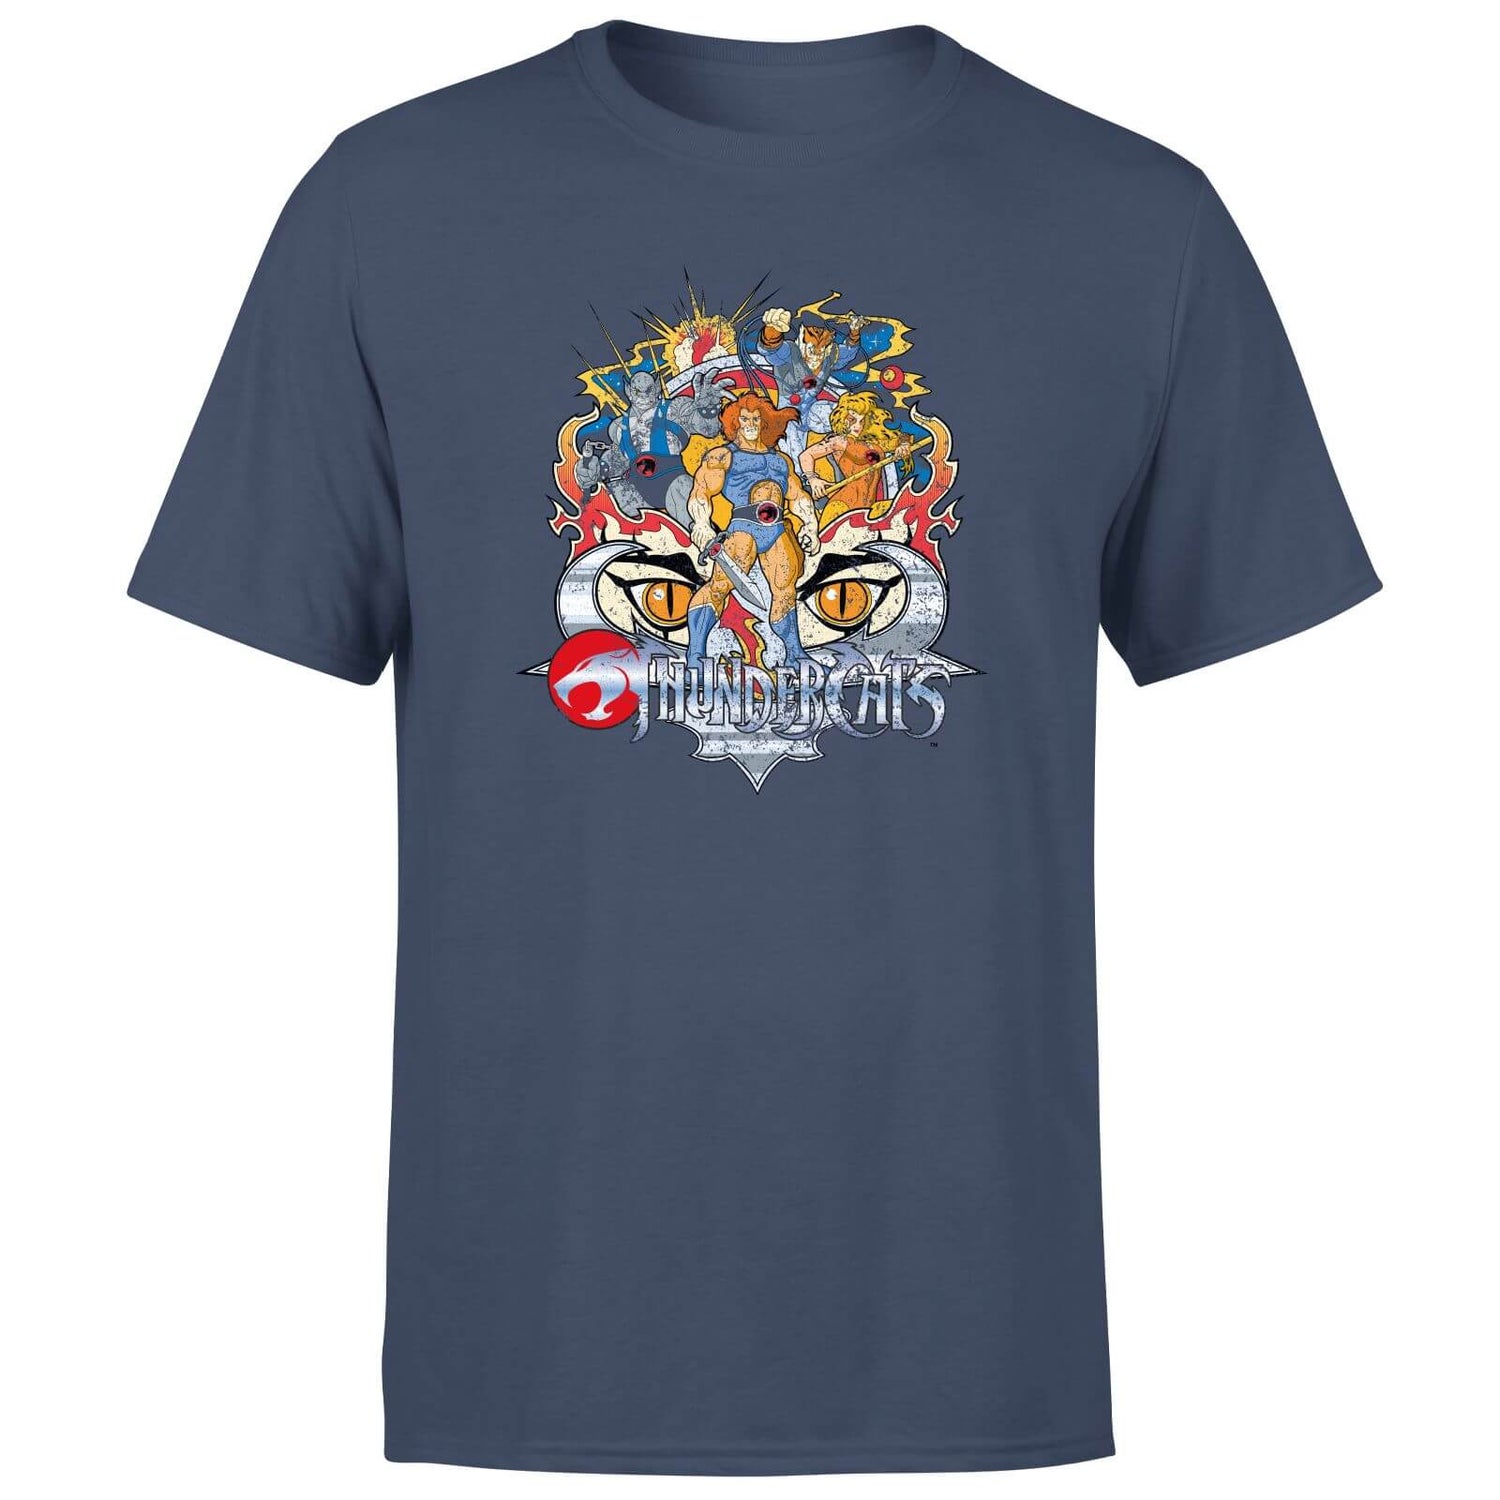 Thundercats Team Unisex T-Shirt - Navy